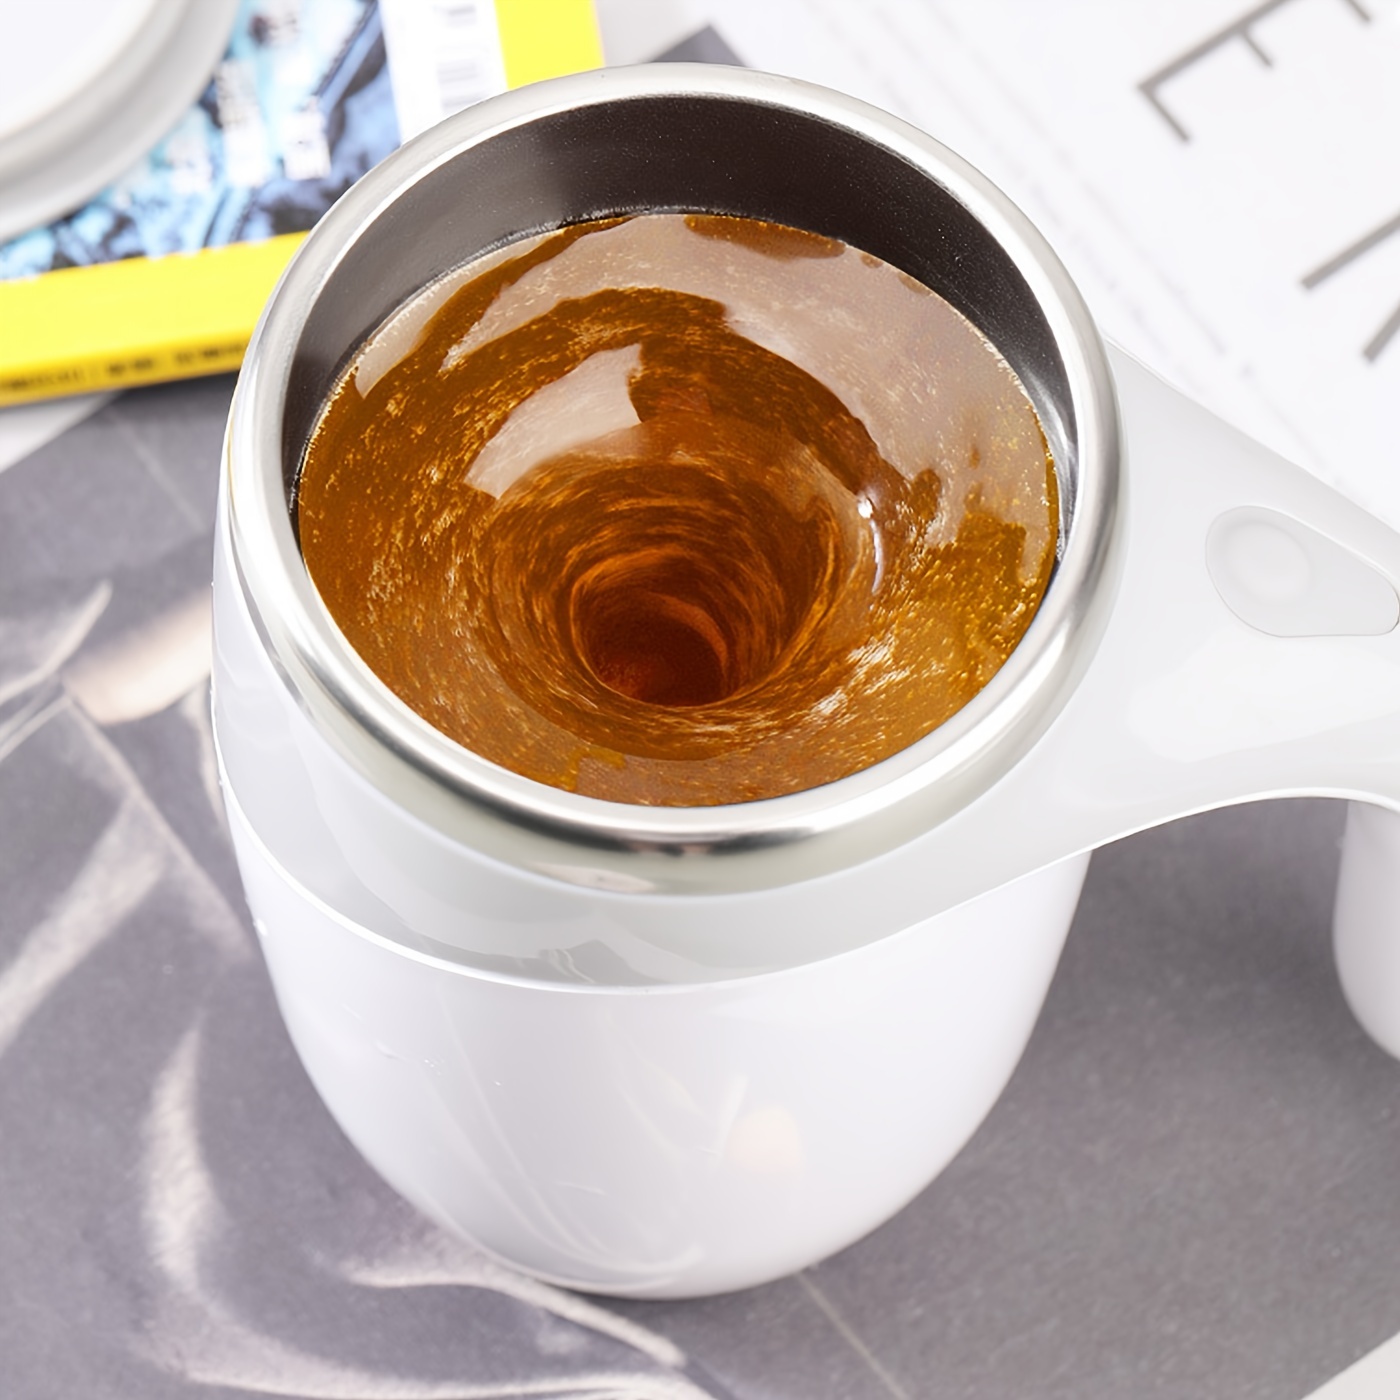 Automatic Magnetic Stirring Coffee Mug, Rotating Home Office